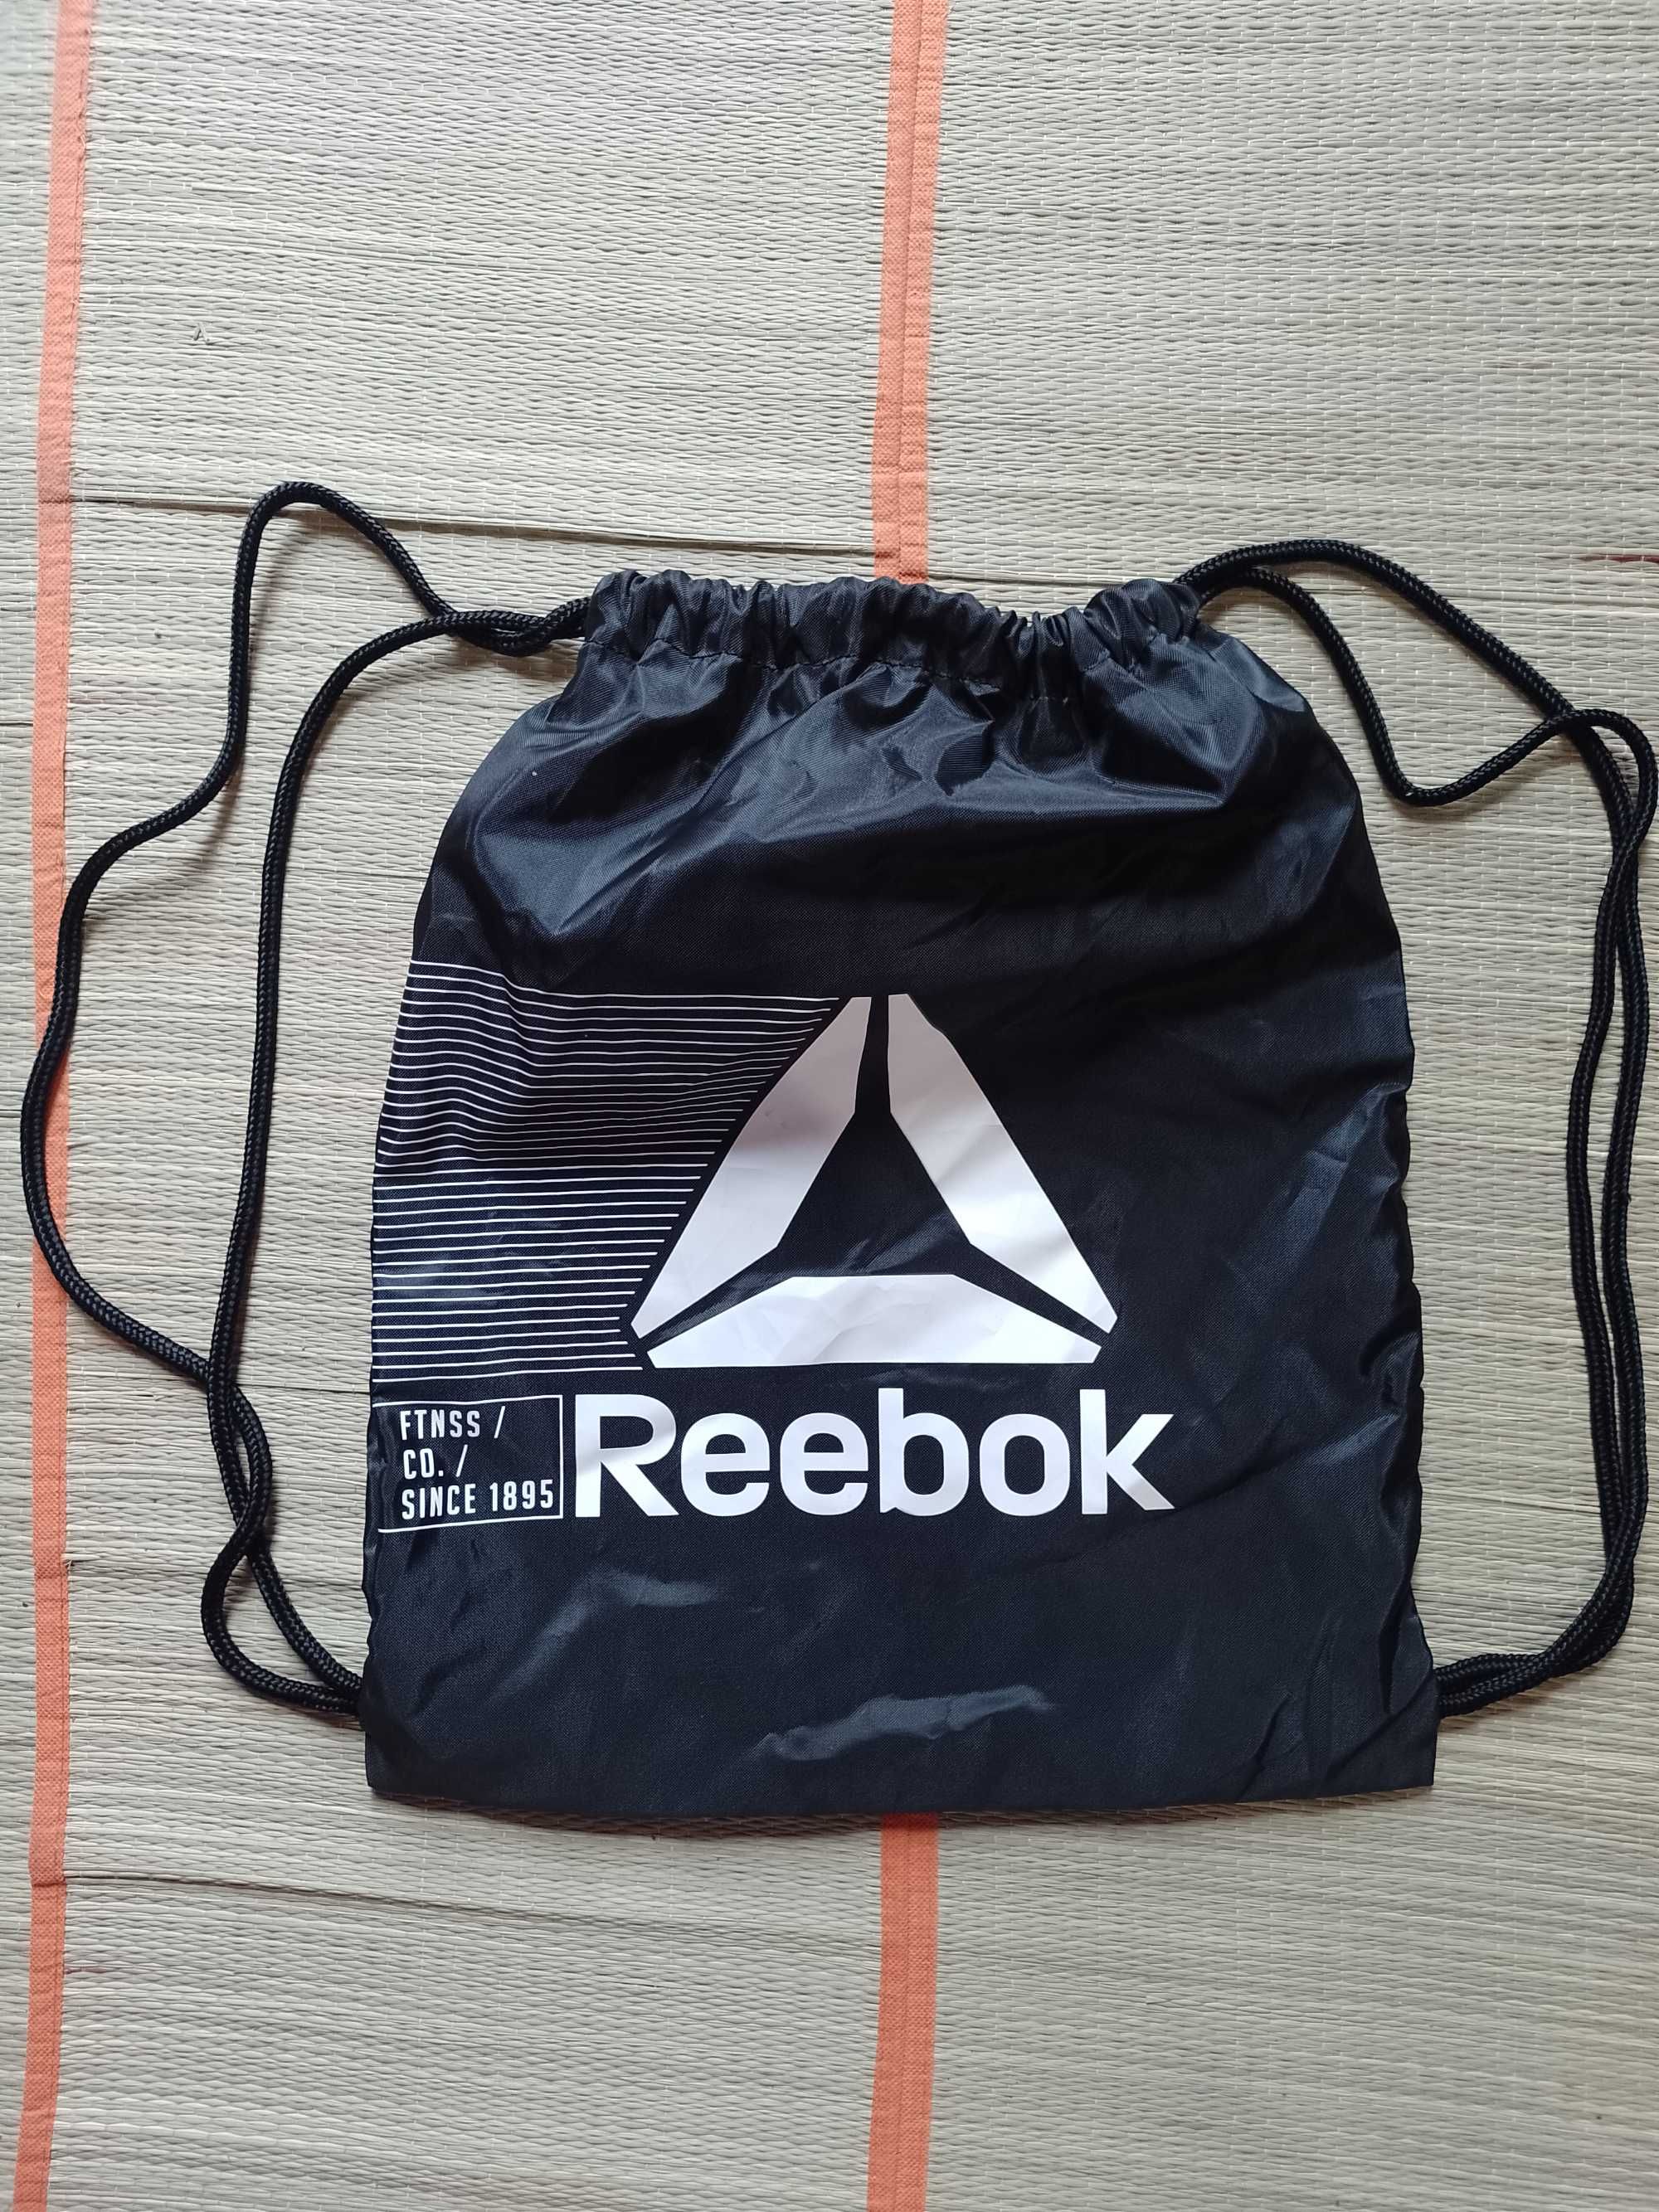 REEBOK/Czarny plecak z Londynu, Worek torebka